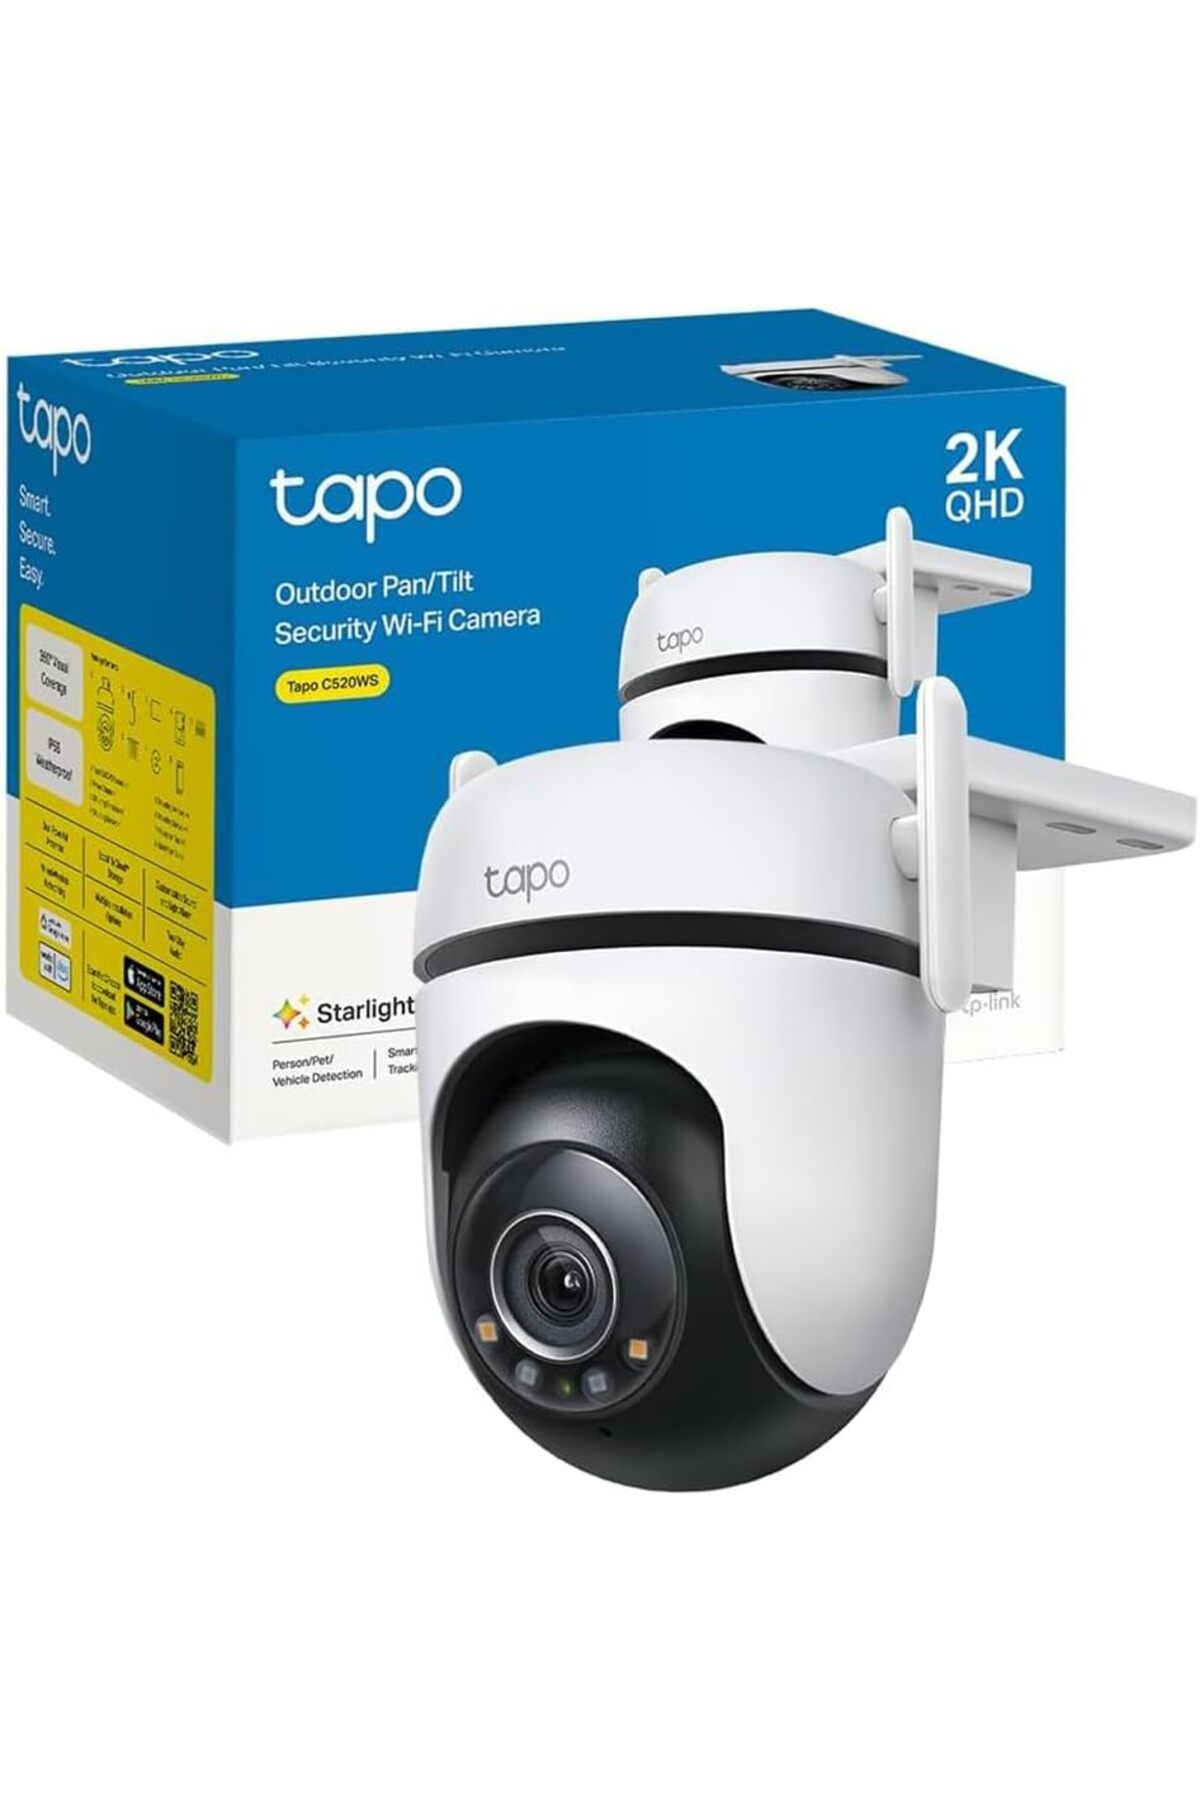 Tp-Link Tapo C520WS 2K QHD Outdoor IP66 Pan/Tilt Wi-Fi Güvenlik Kamerası